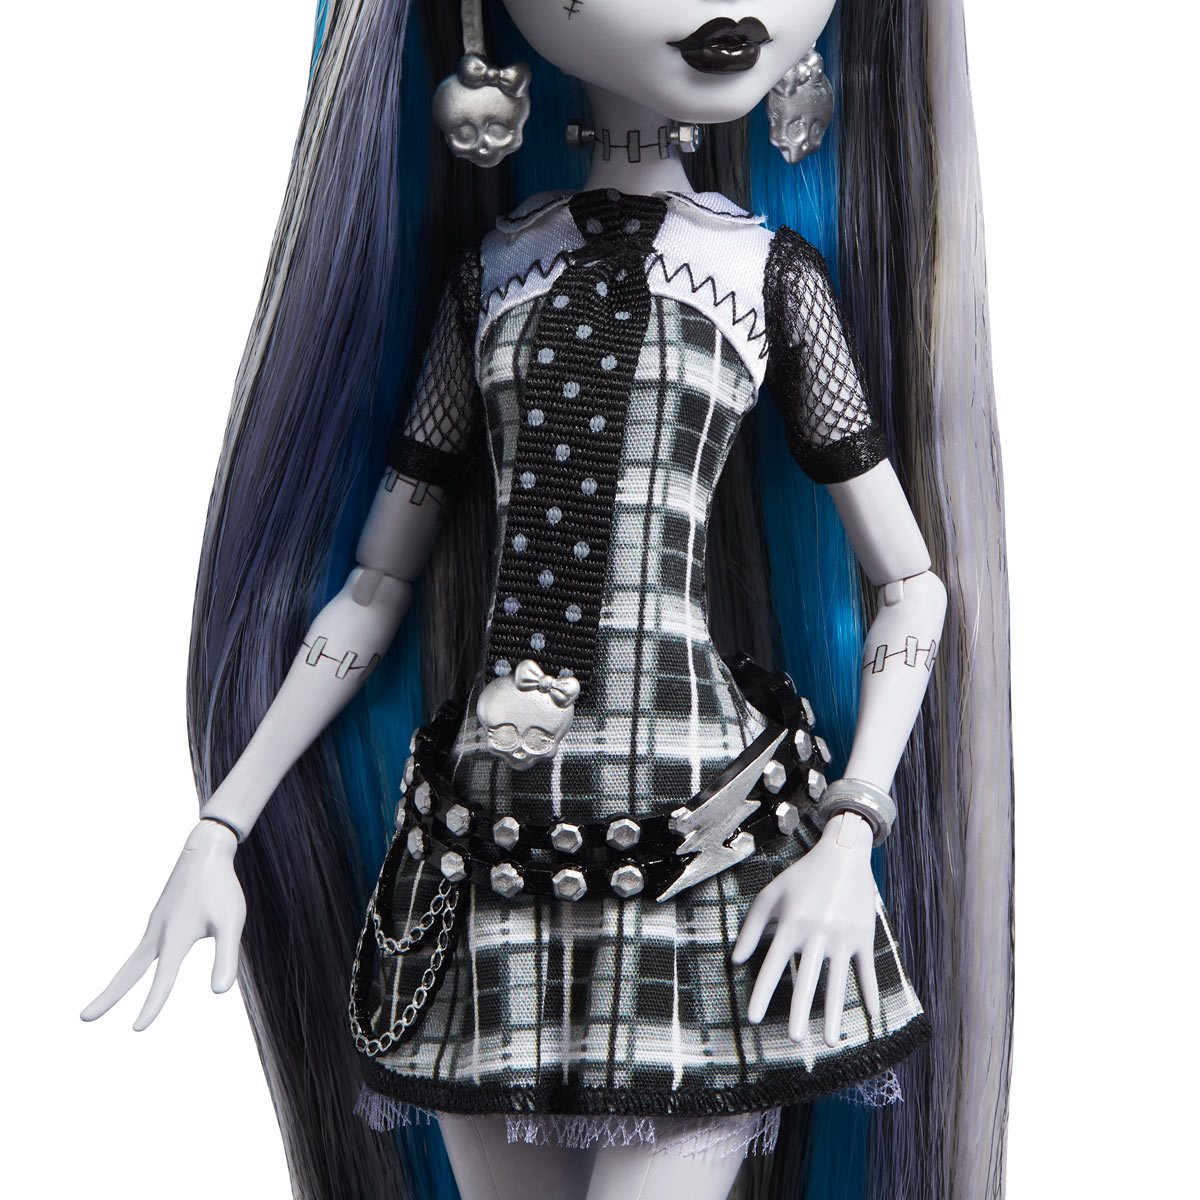 Mattel Monster High Reel Drama Clawdeen Wolf / Lagoona Blue / Draculaura /  Frankie Stein Doll Set